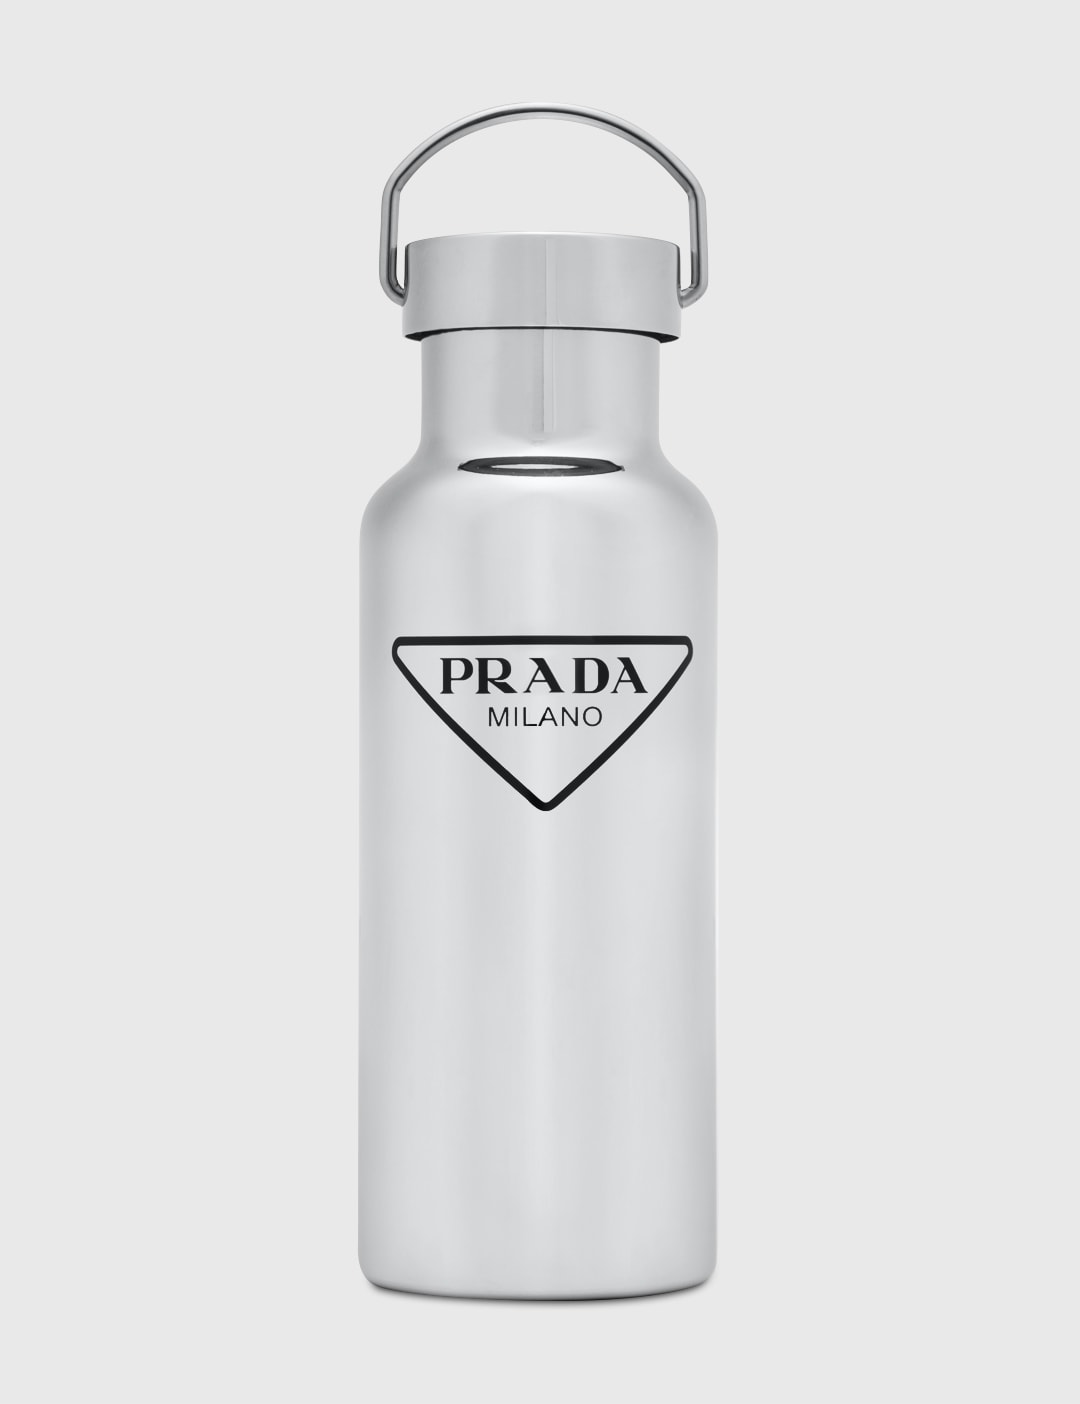 Prada stainless steel insulated water bottle 500 ml